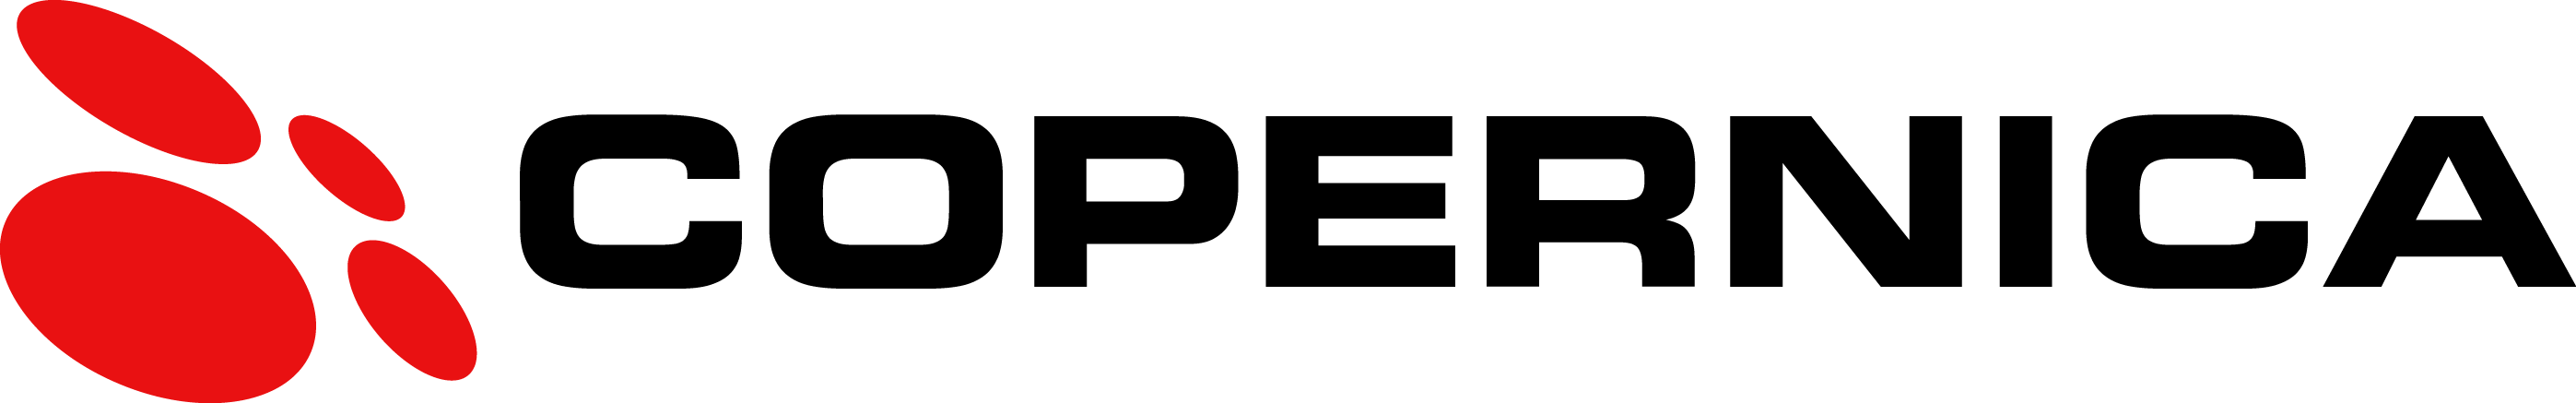 copernica logo